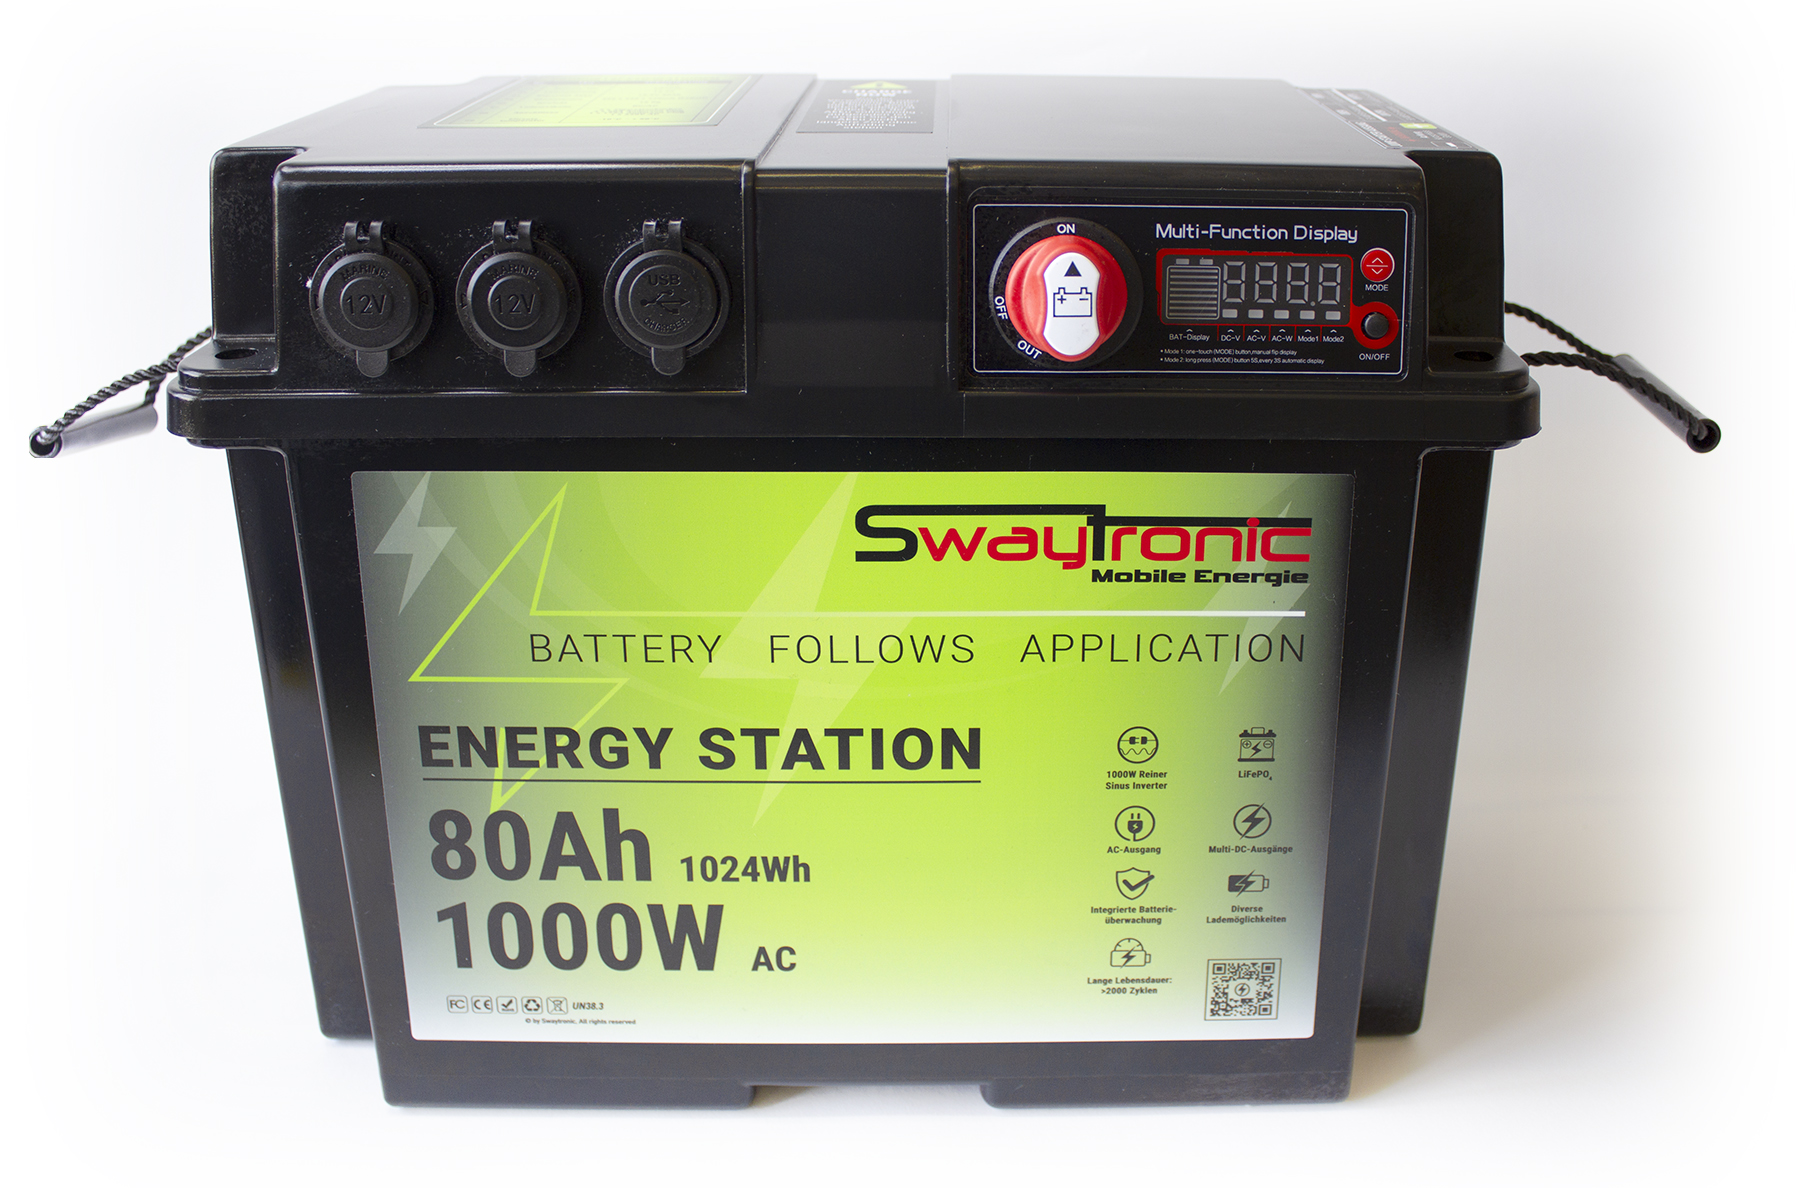 SWAYTRONIC - Energy Station 80Ah 1000W